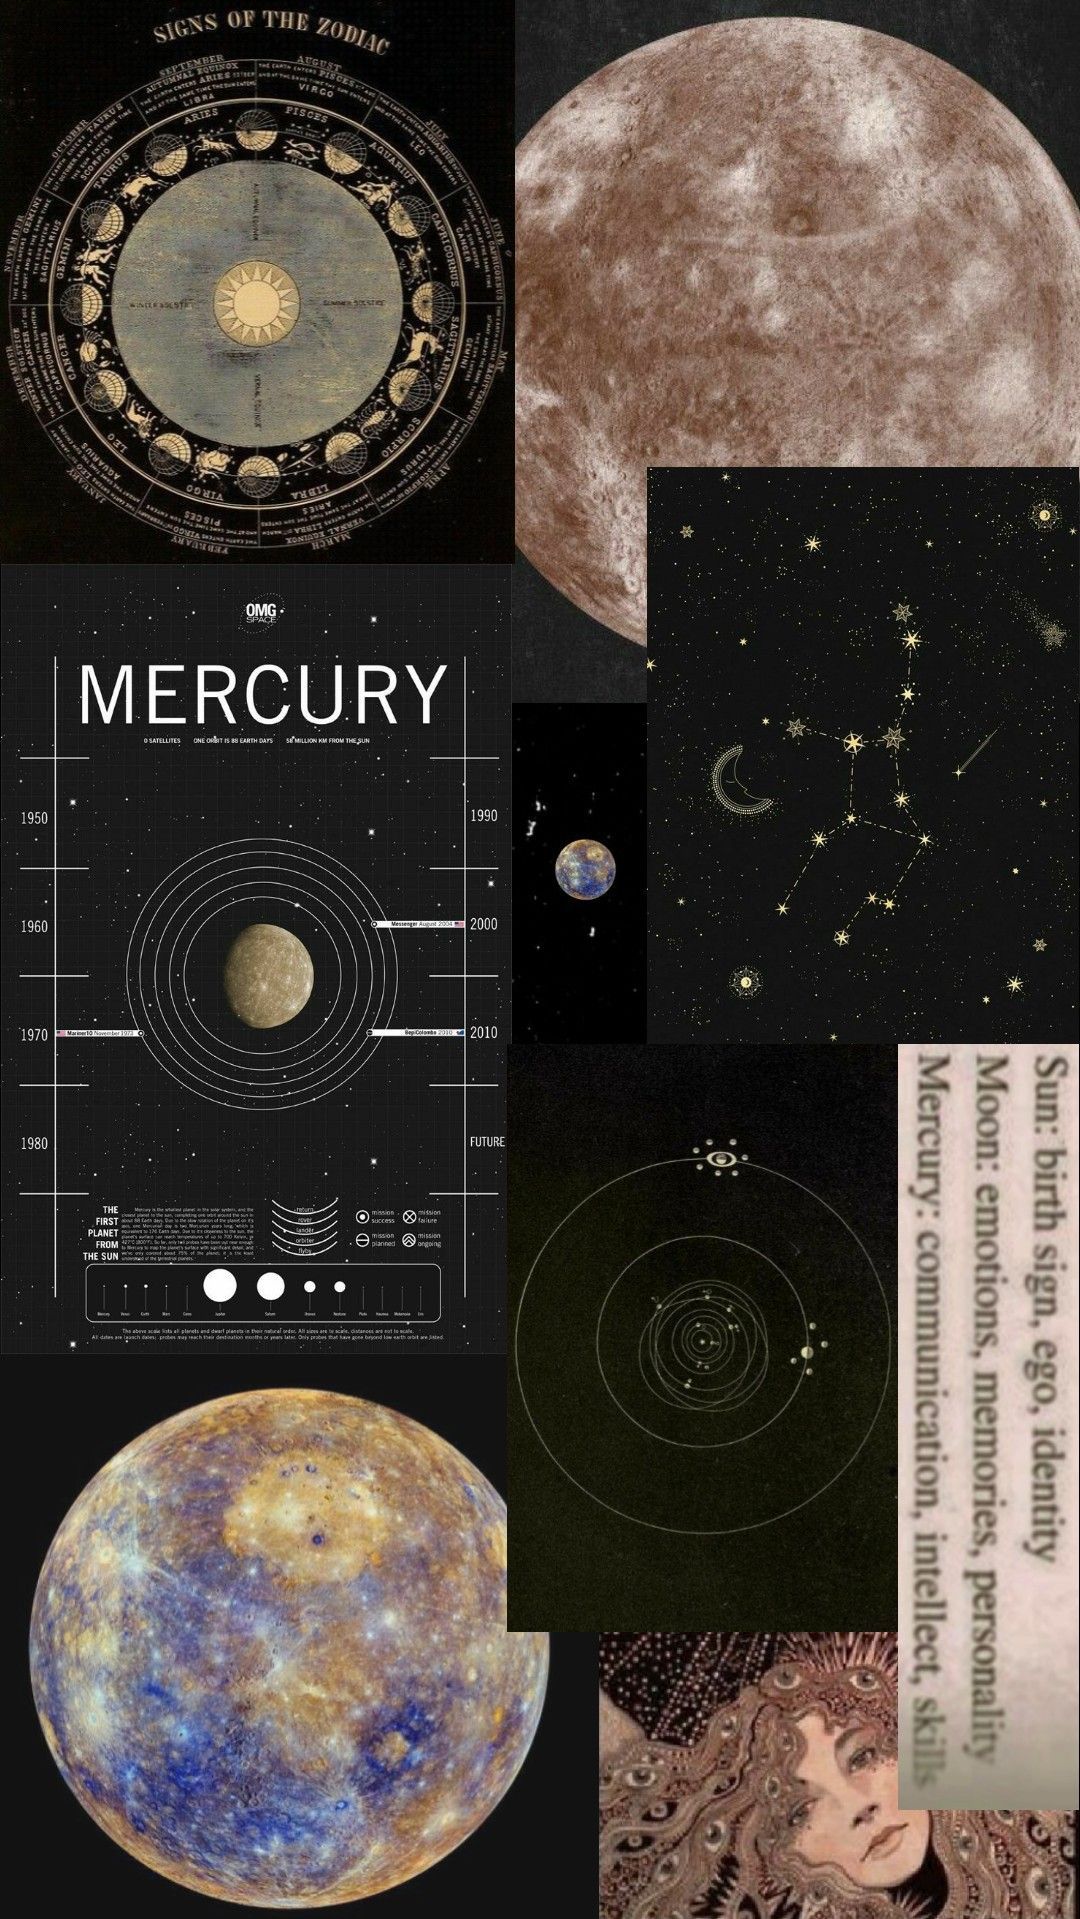 Mercury wallpaper (planet). Aesthetic iphone wallpaper, iPhone wallpaper tumblr aesthetic, Aesthetic wallpaper